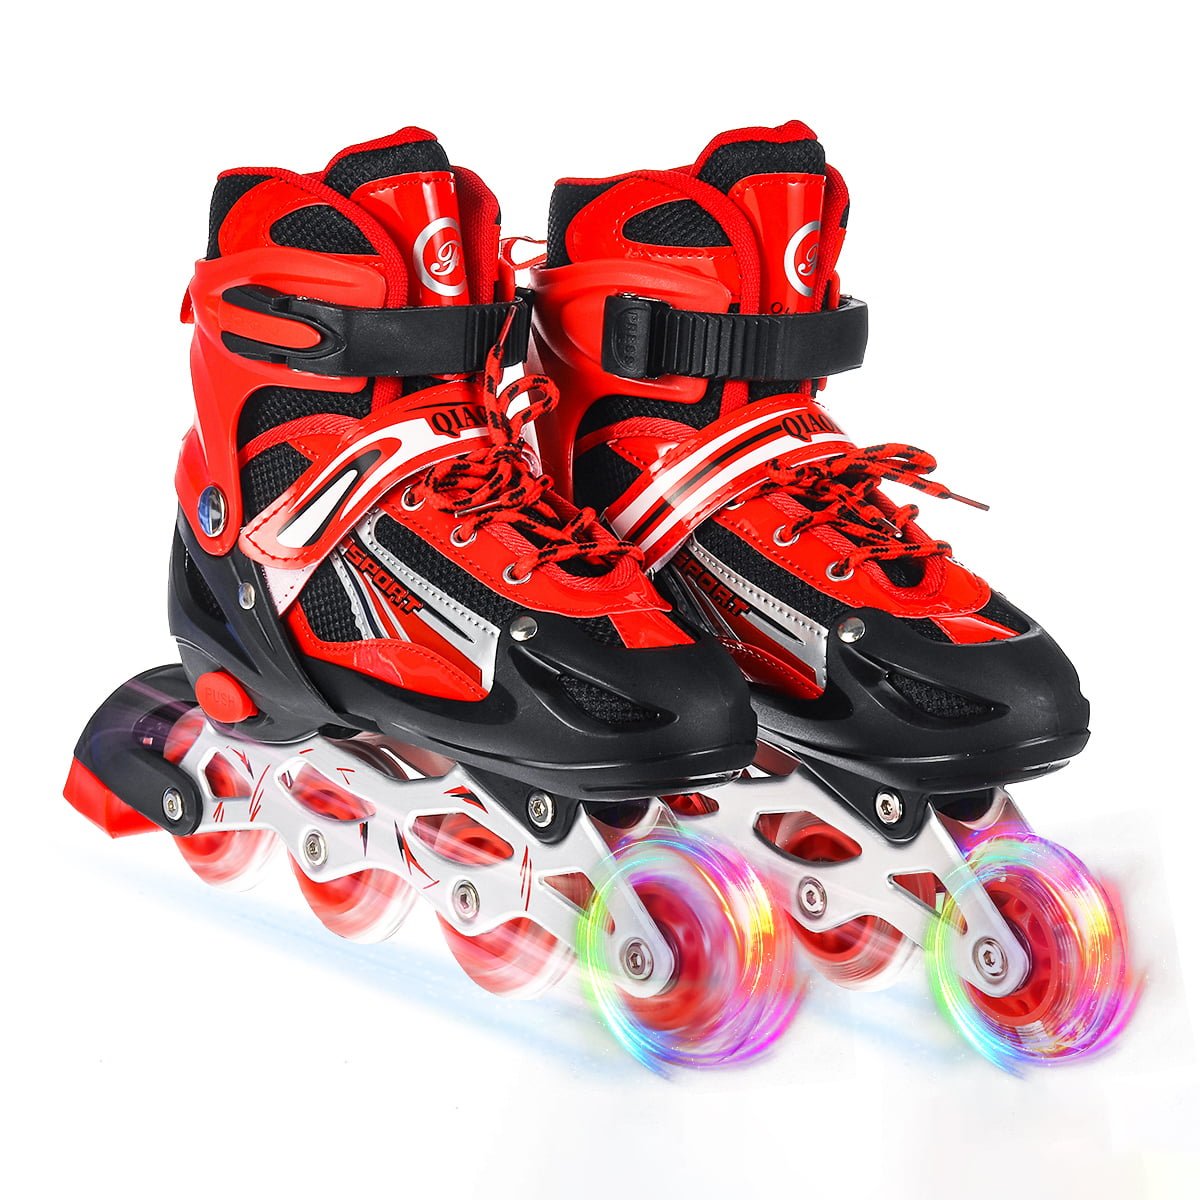 Adjustable Illuminating Inline Skates For Kids Boys Girls, Flashing Skate Shoes Roller Skates Outdoor Sports Size 9.5M US Little Kid - 7.5M US Big Kid